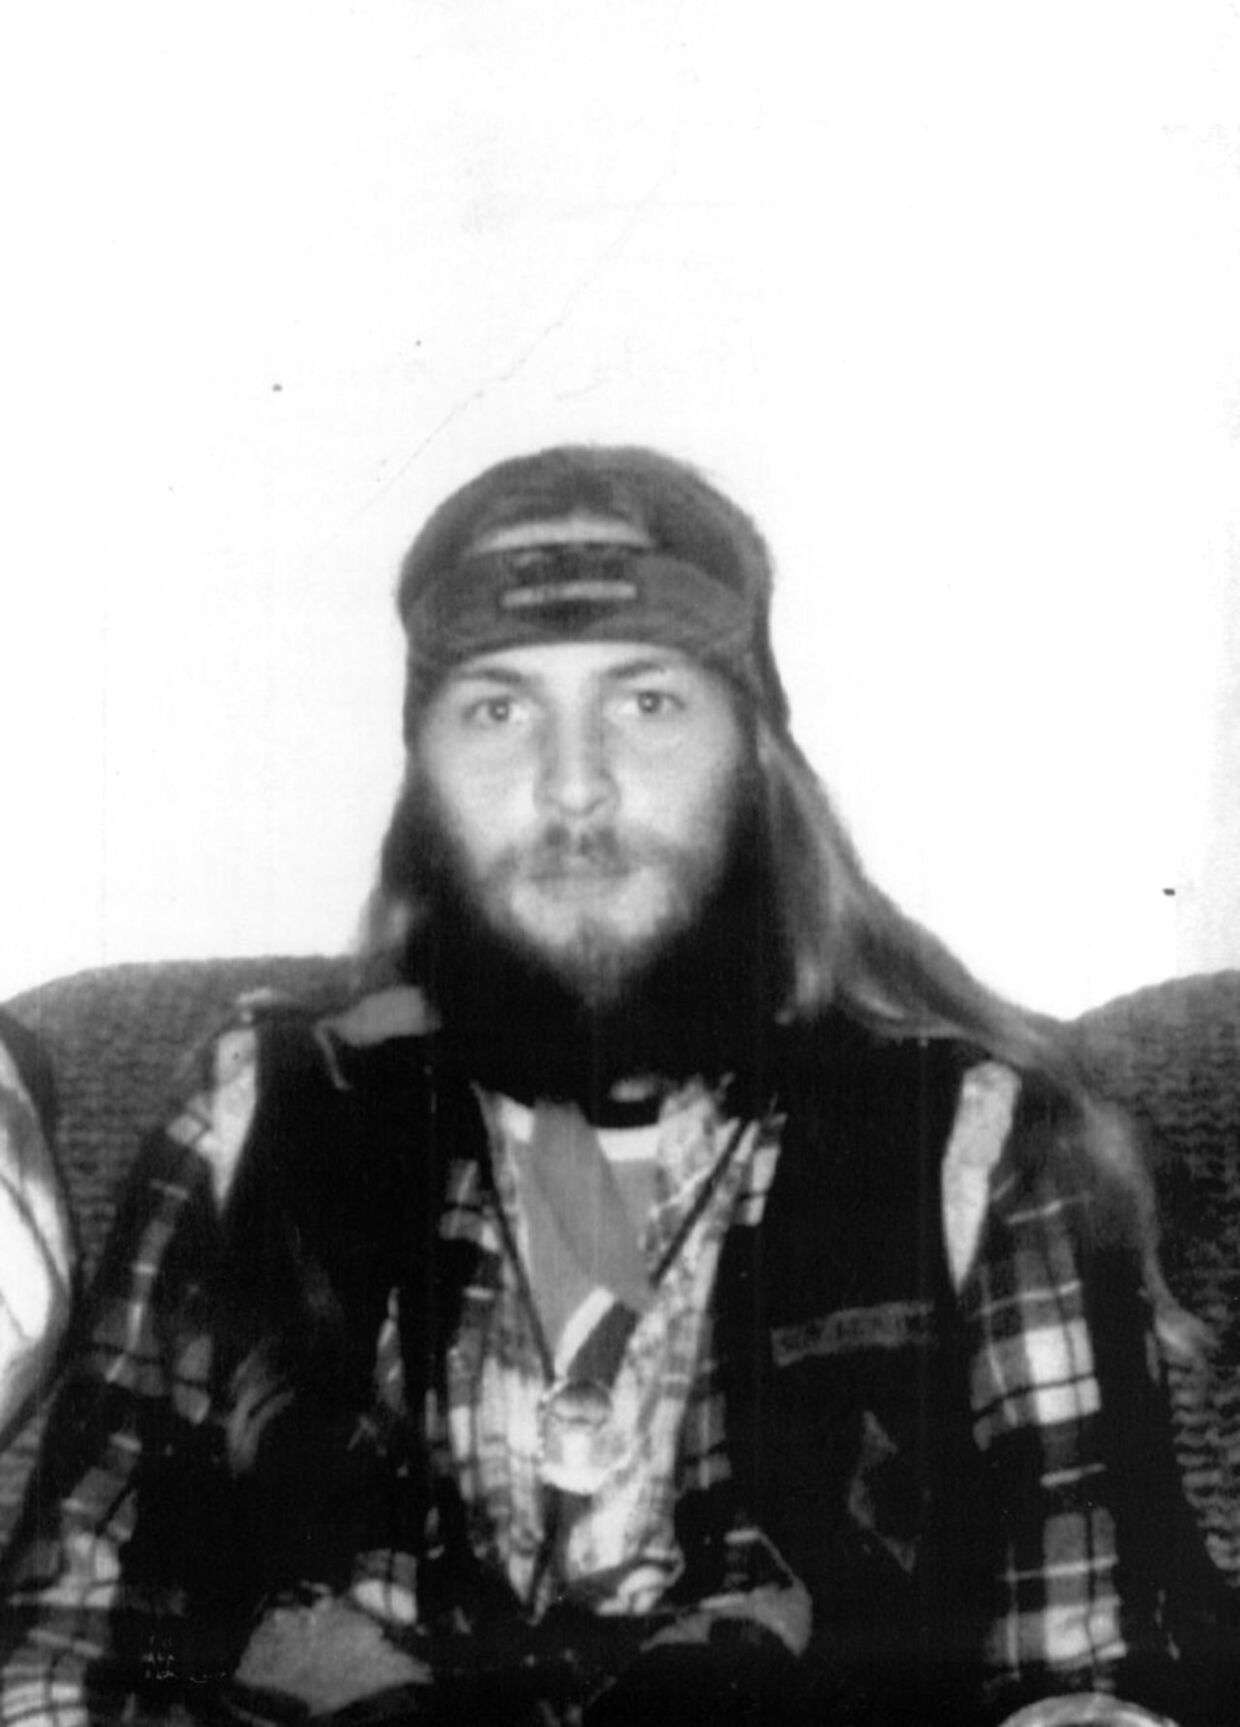 Tirsdag den 27. januar 1987 blev den 28 årige SAS-portør Niels Aage Albret dræbt i Bullshits klubhus, som lå på Kirkegårdsvej 7 på Amager. Gerningsmanden var den 27 årige Bullshit-rocker Peter 'Panik' Espensen